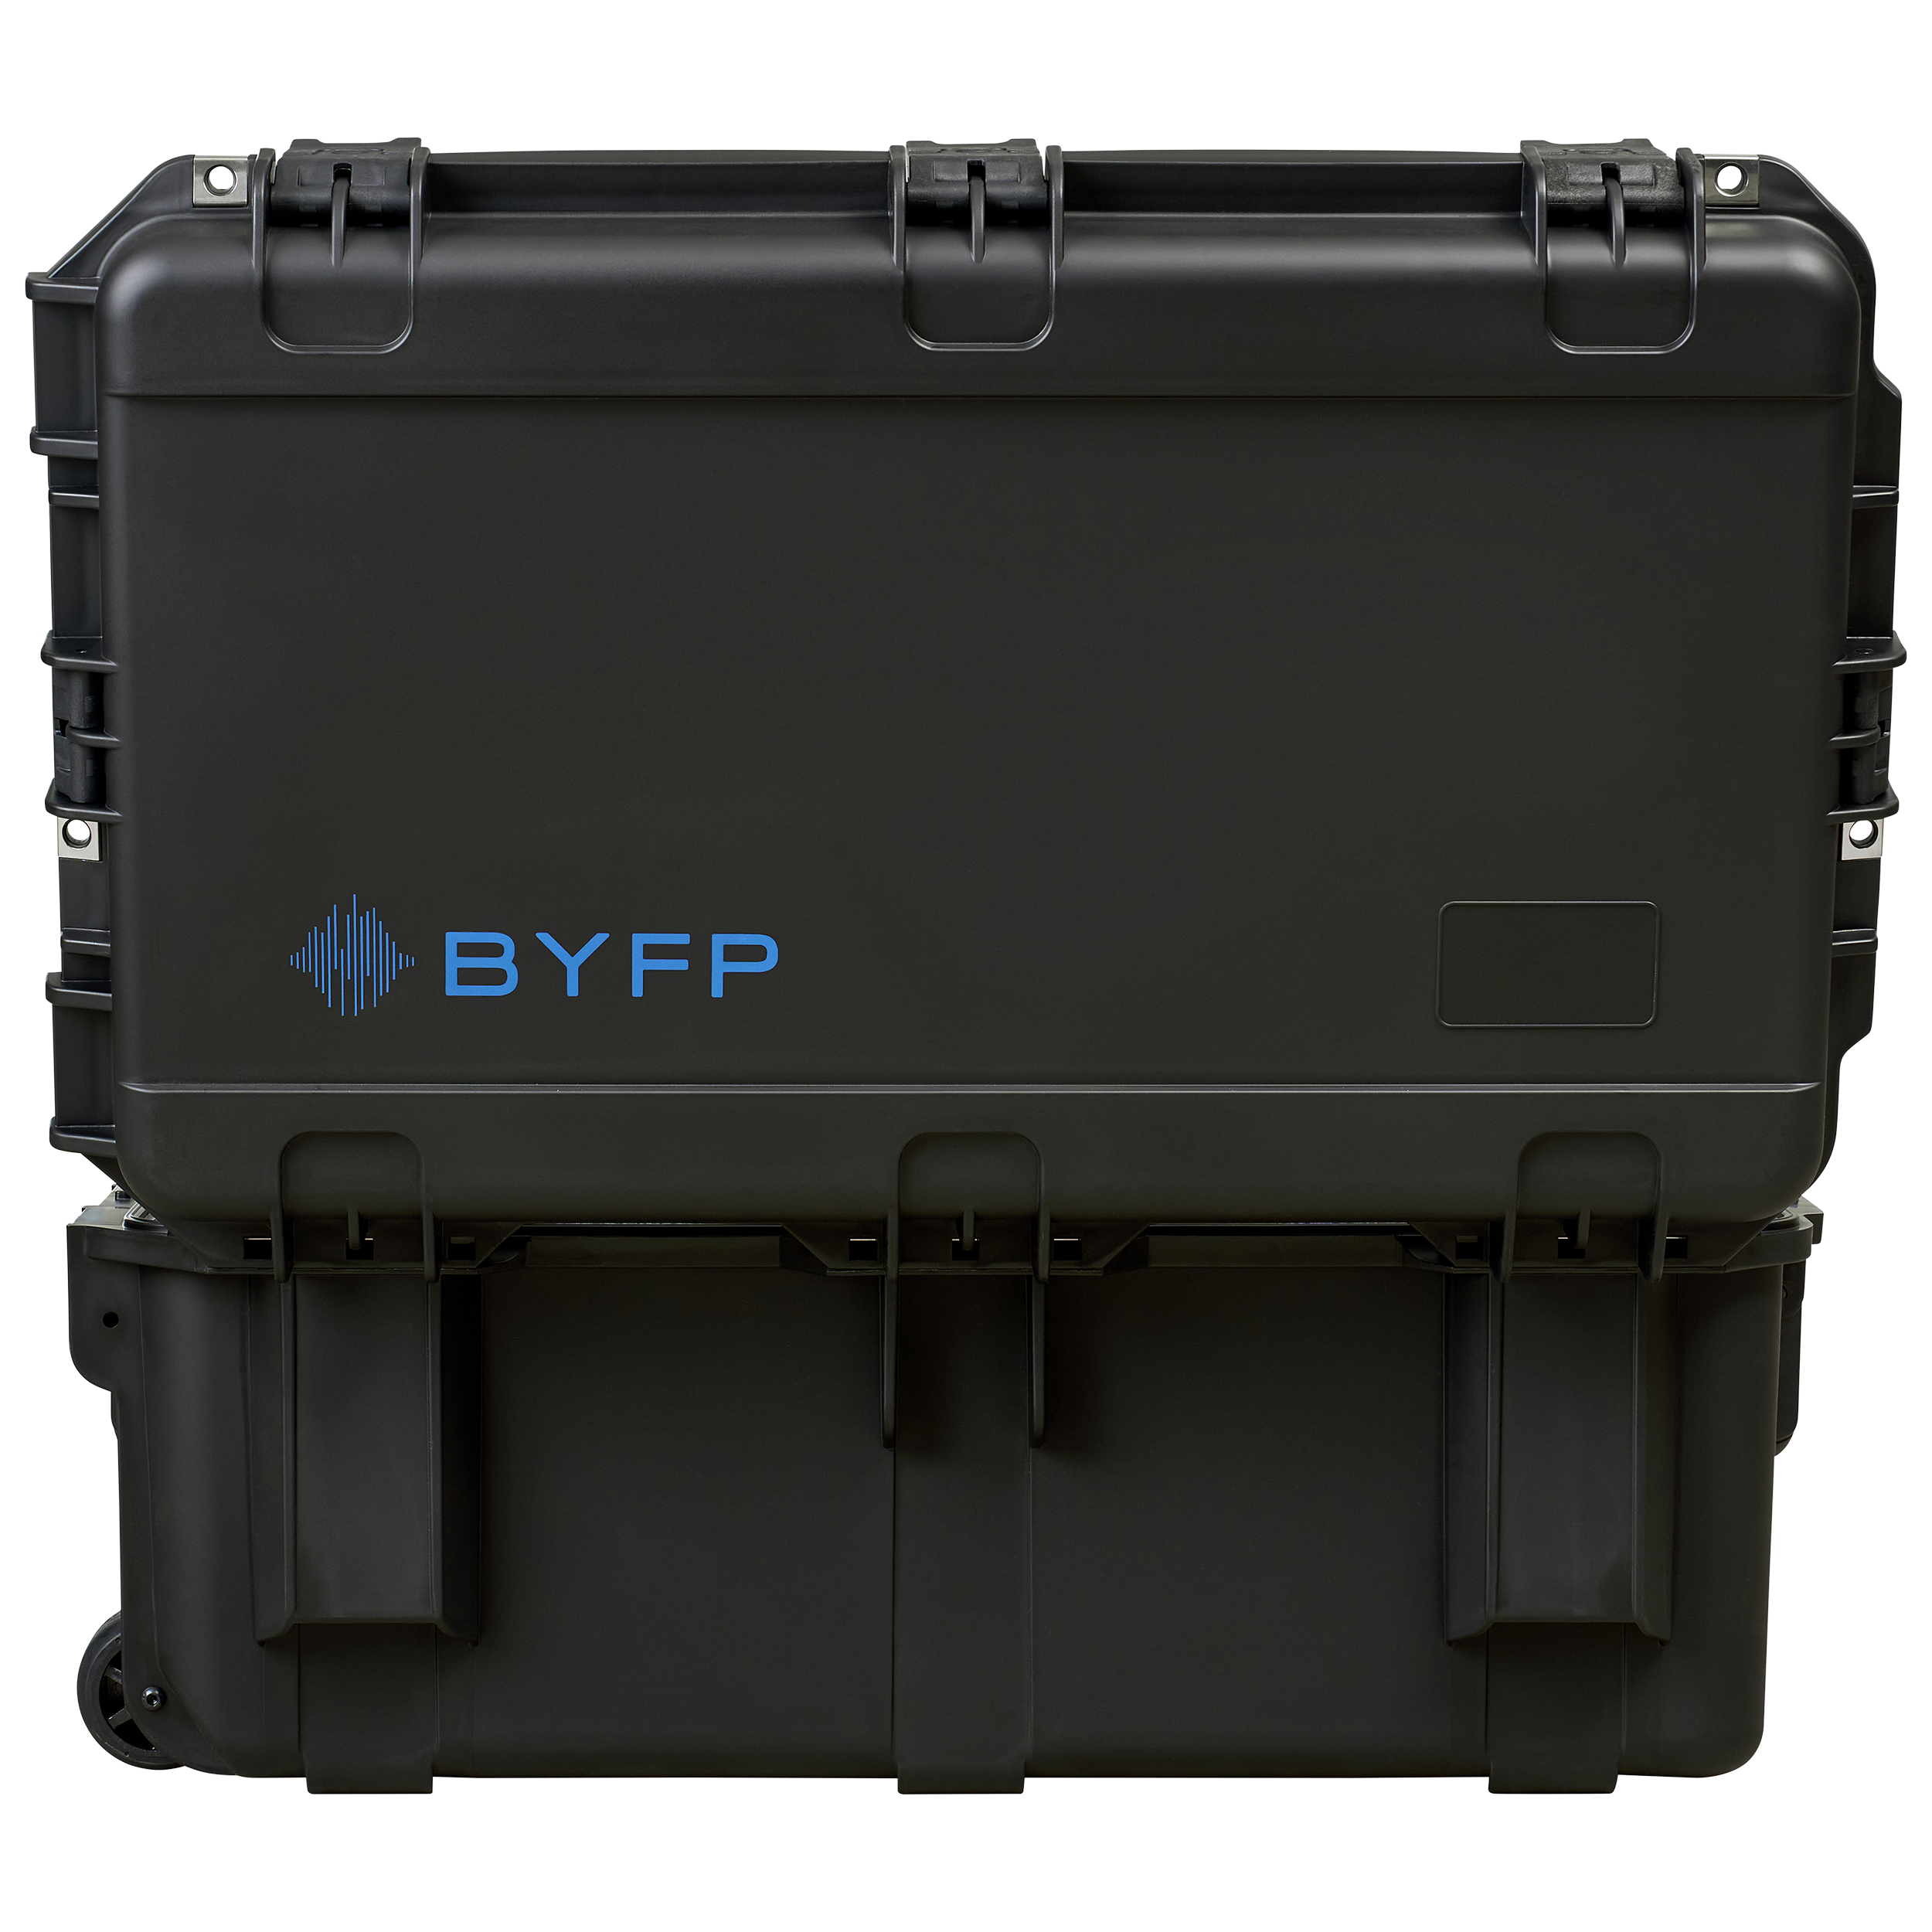 BYFP ipCase for 4x Clear-Com Encore 1-Channel Beltpack